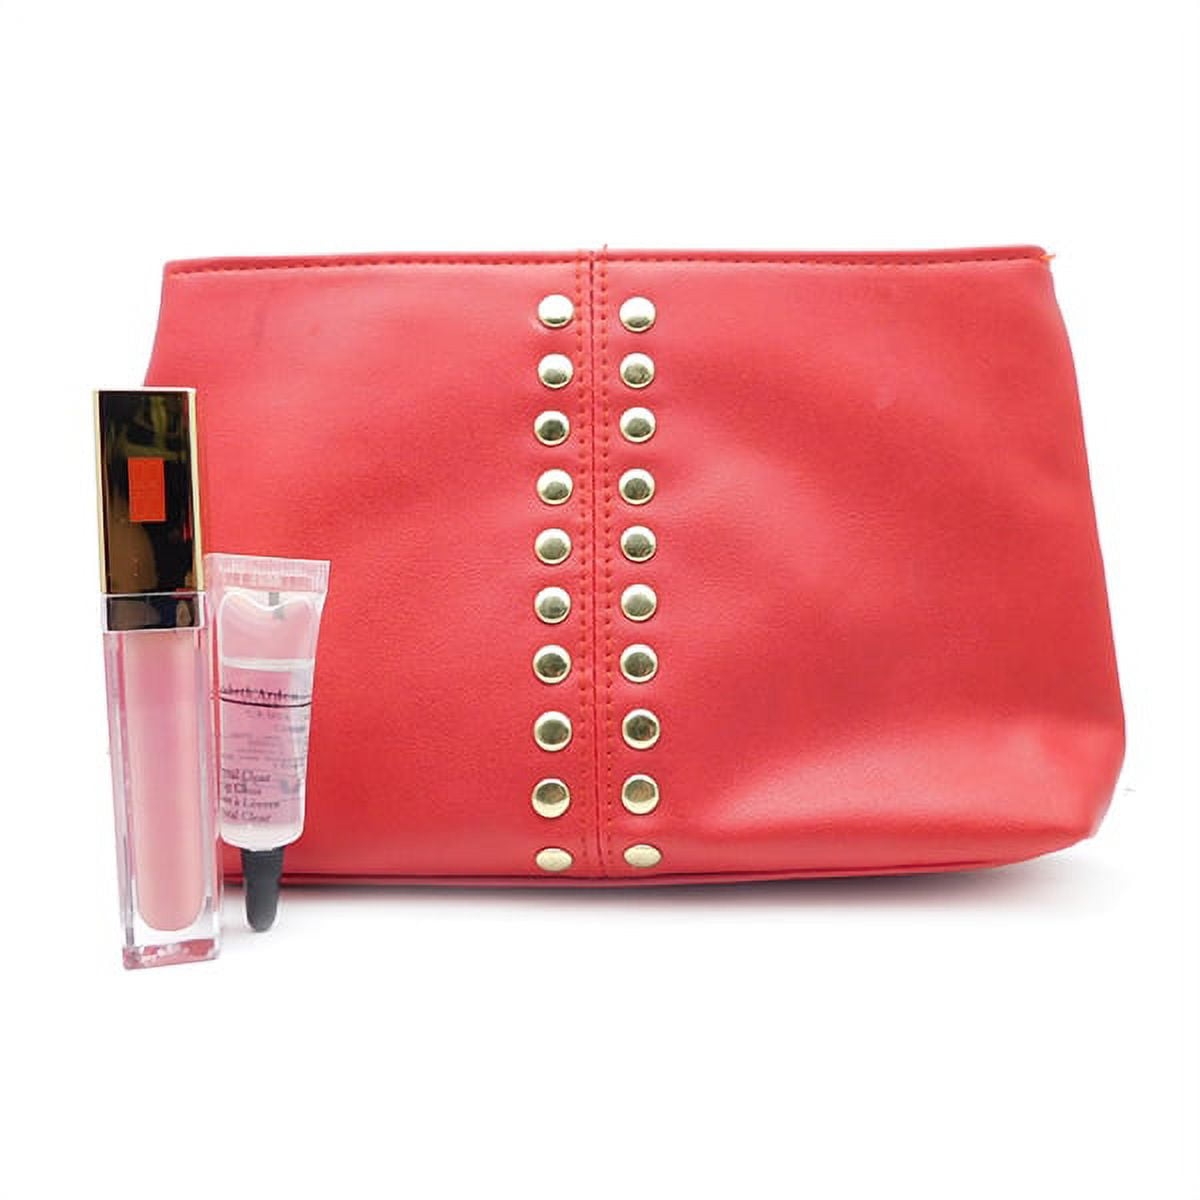 Elizabeth Arden Red Cosmetic Bags | Mercari